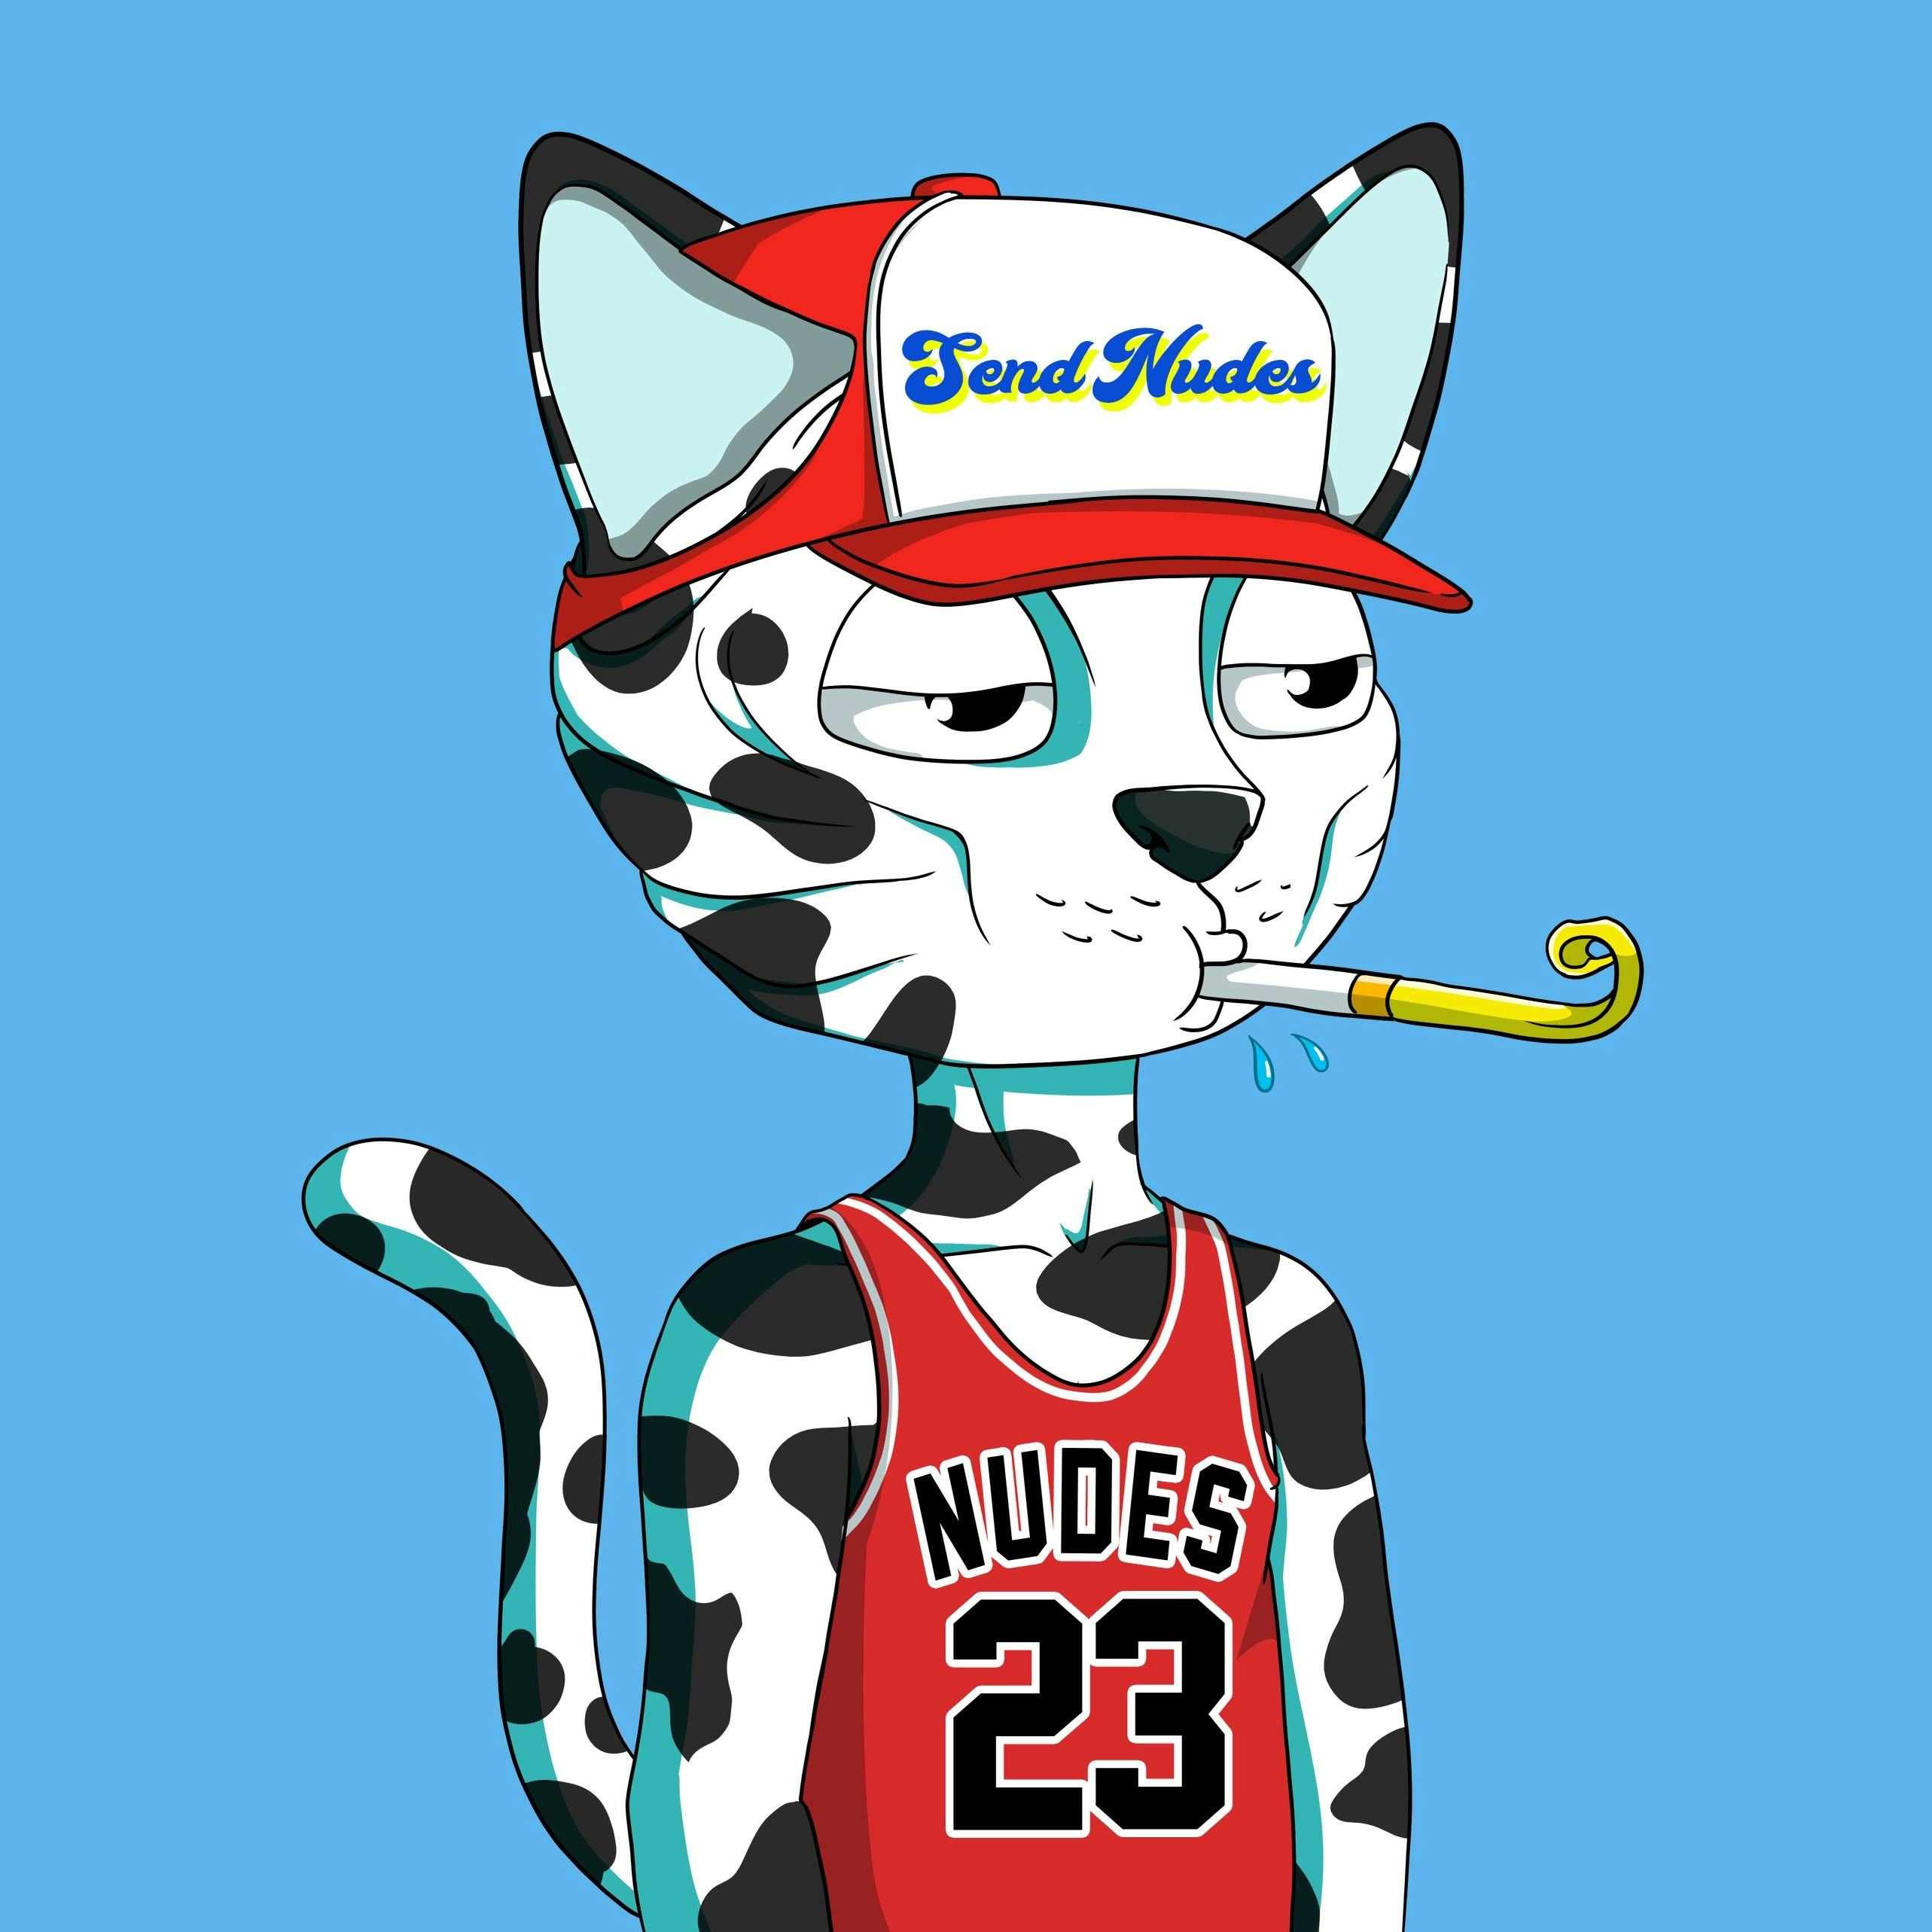 Buy Funny Meme Beluga Cat Discord Shirt For Free Shipping CUSTOM XMAS  PRODUCT COMPANY